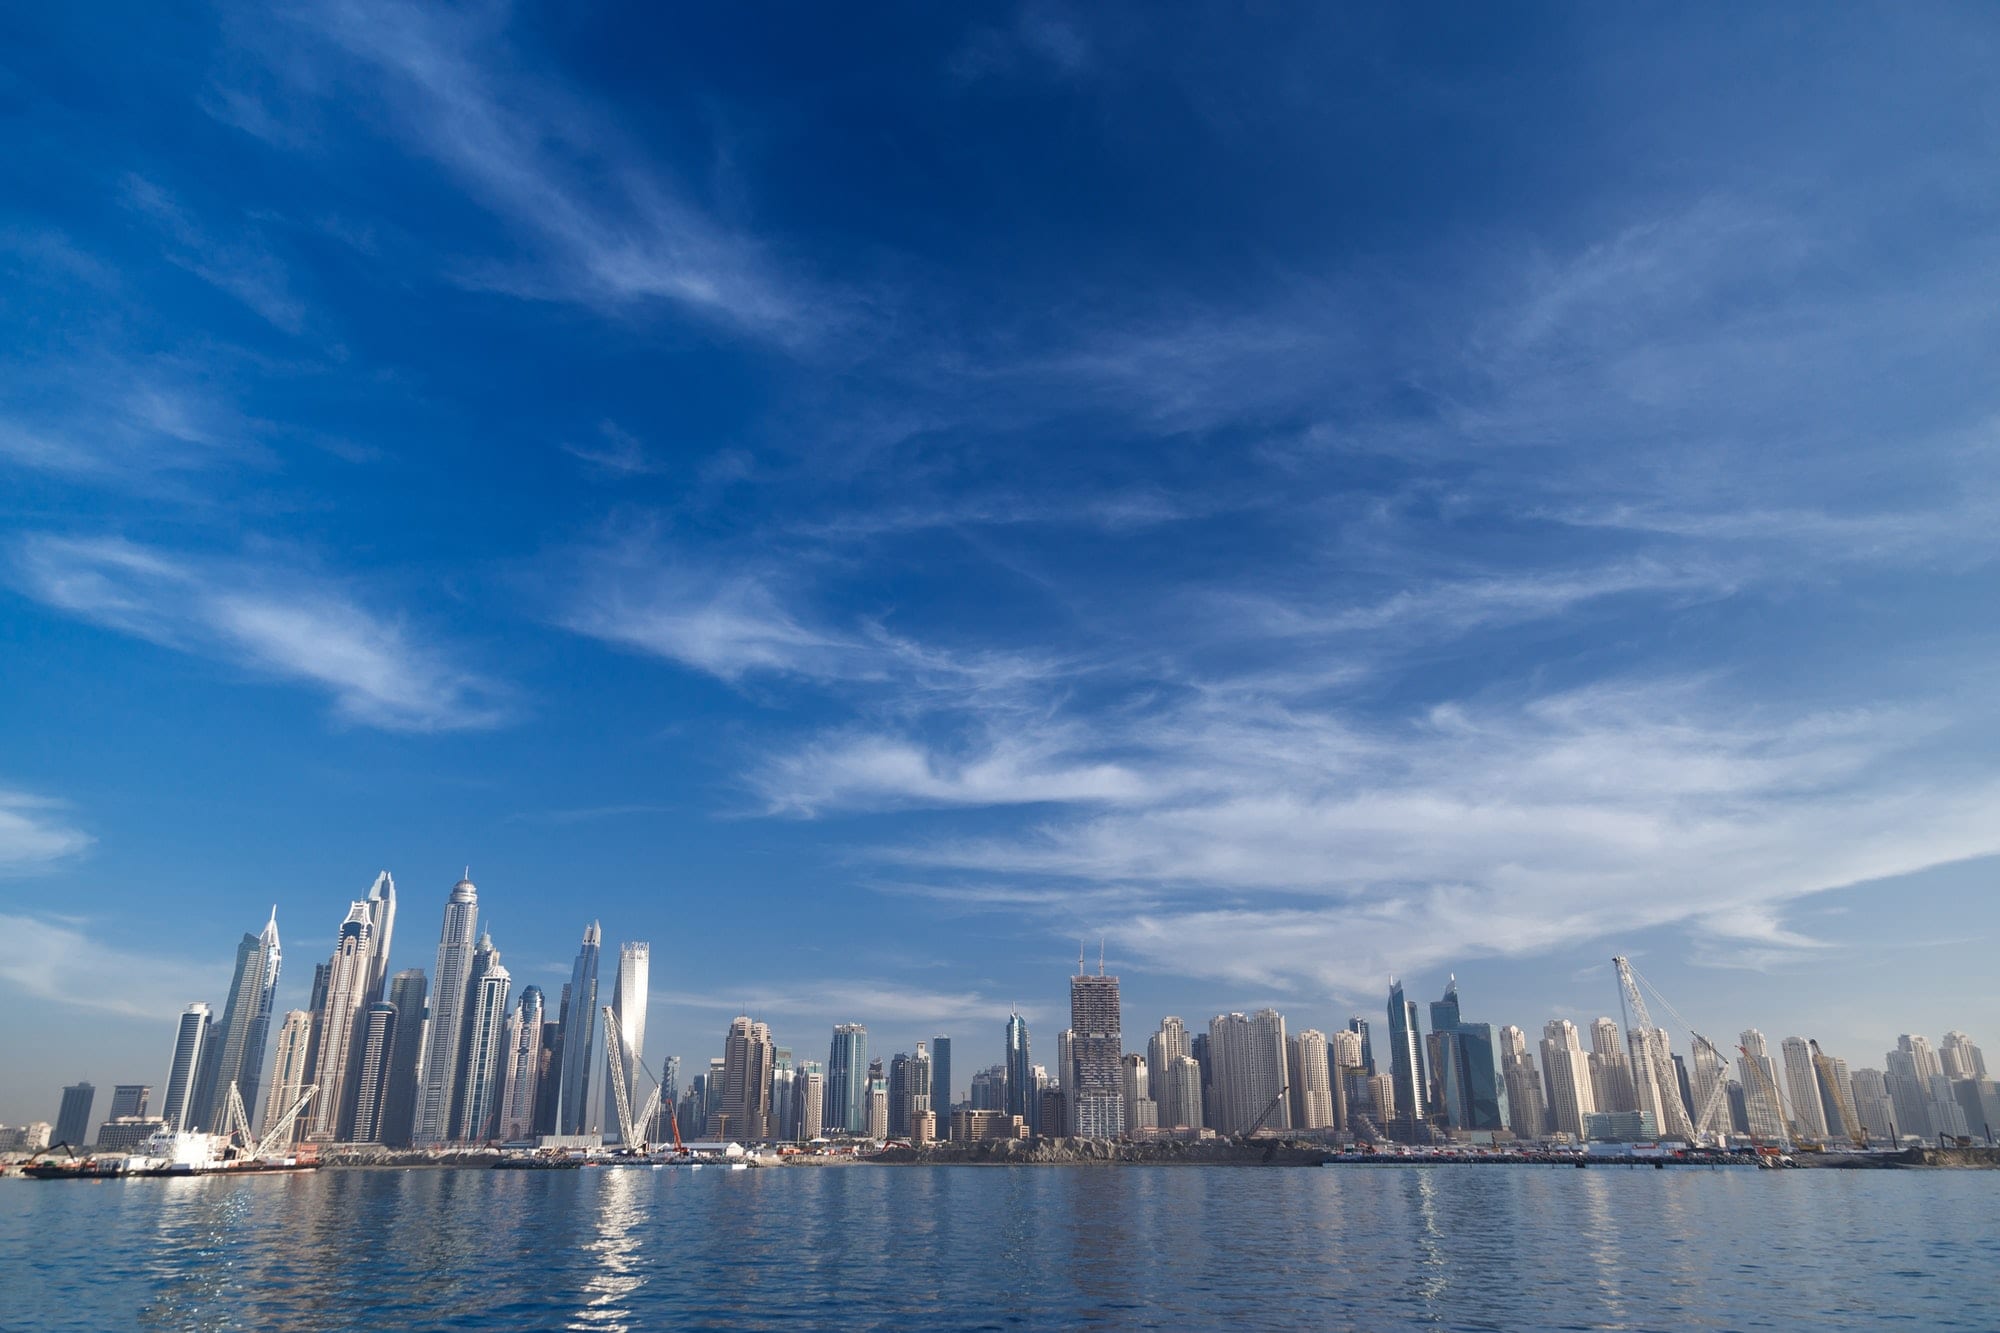 Dubai skyline. JBR Jumeirah beach residencies.